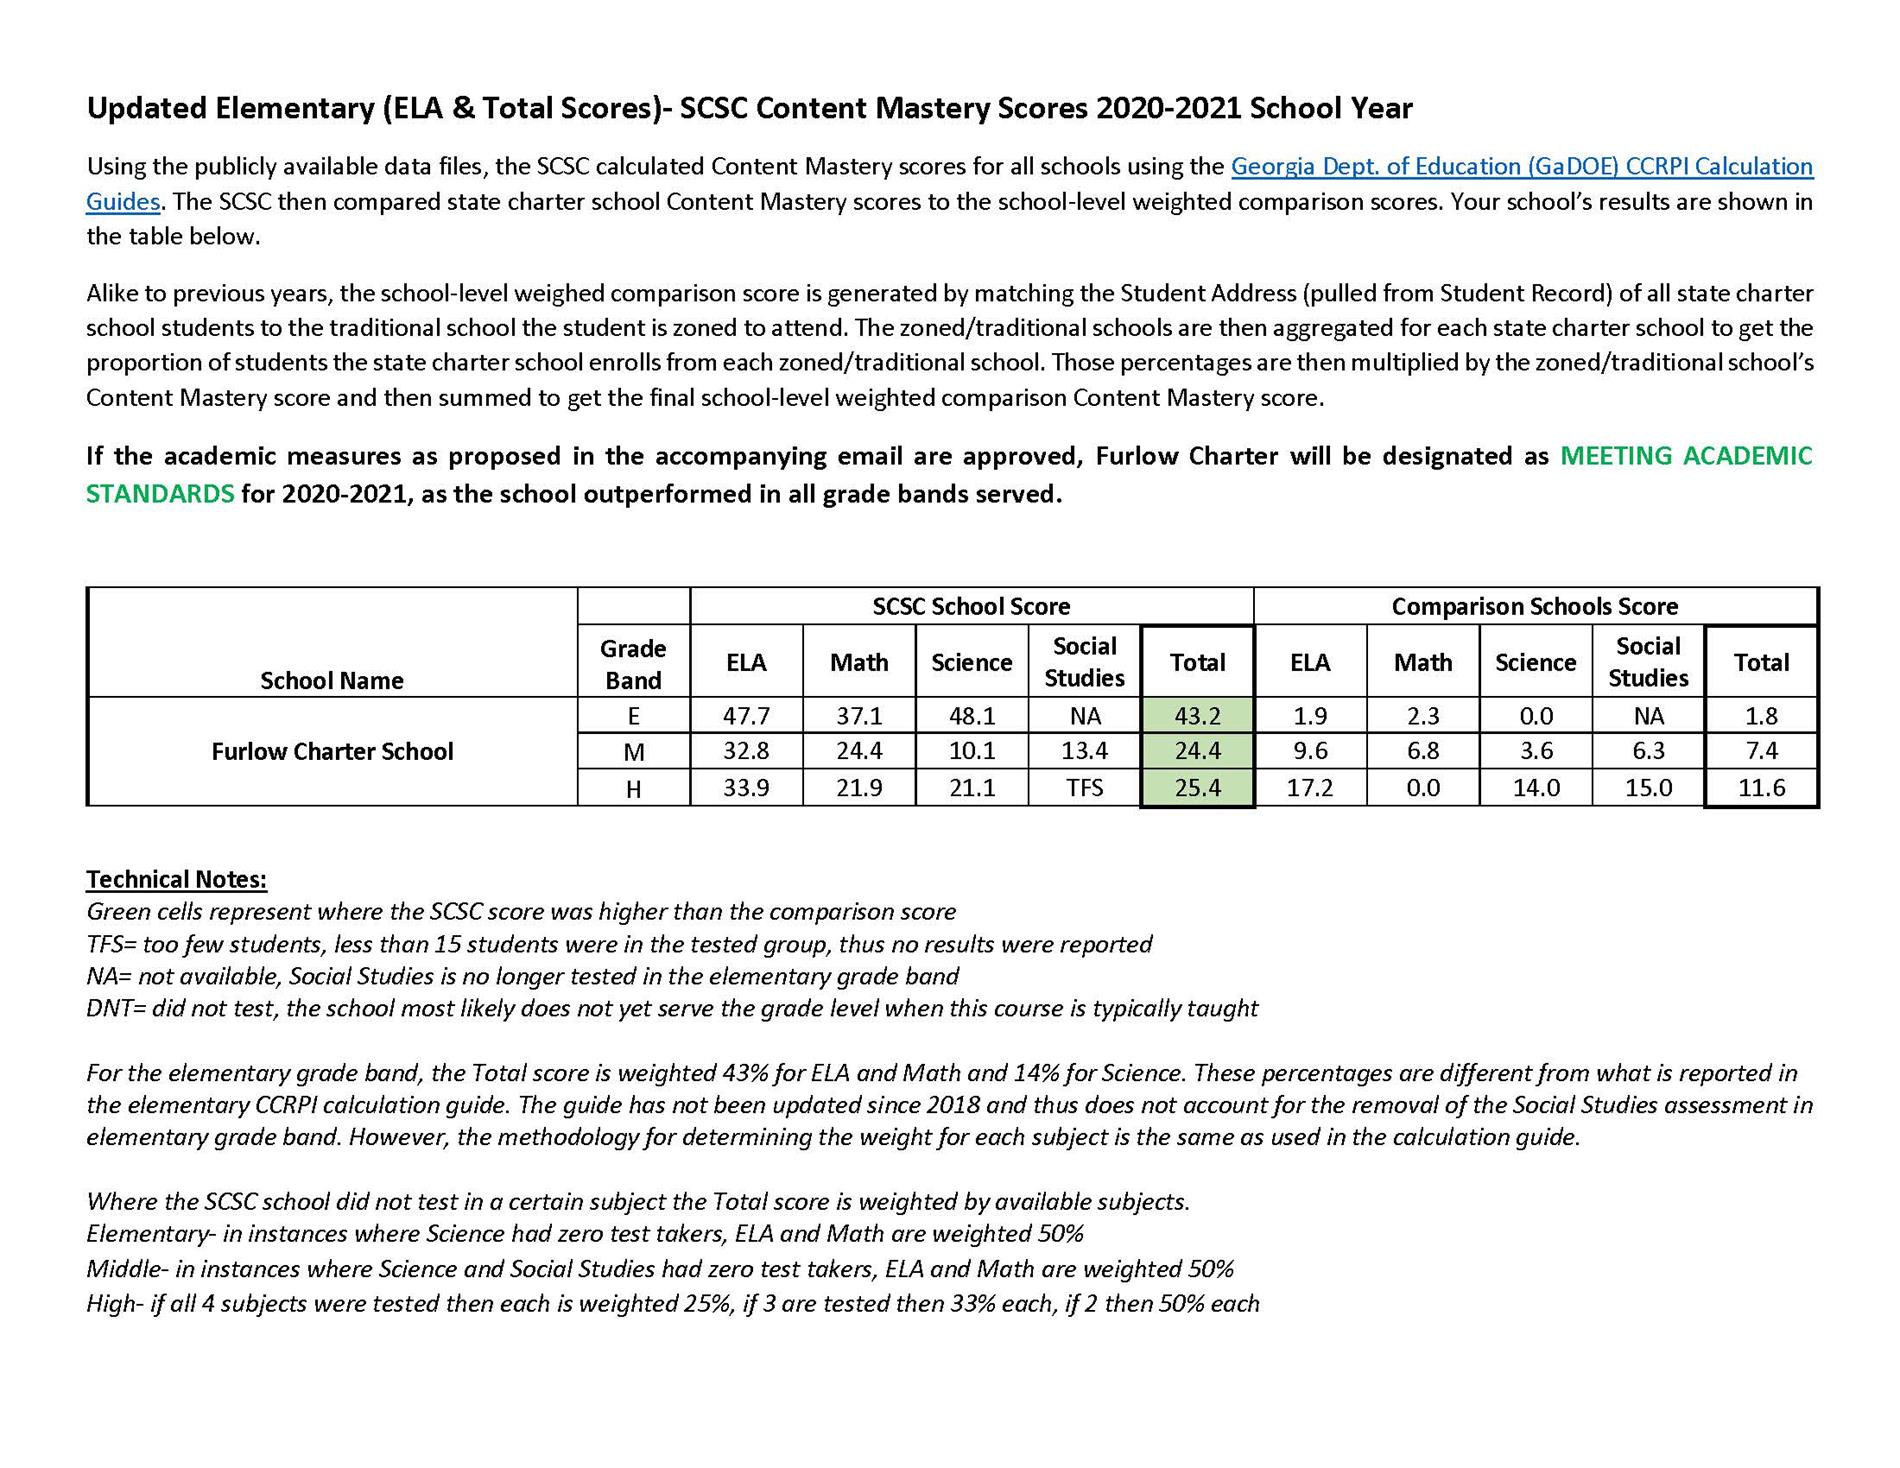 2020-2021 SCSC Academic Measures